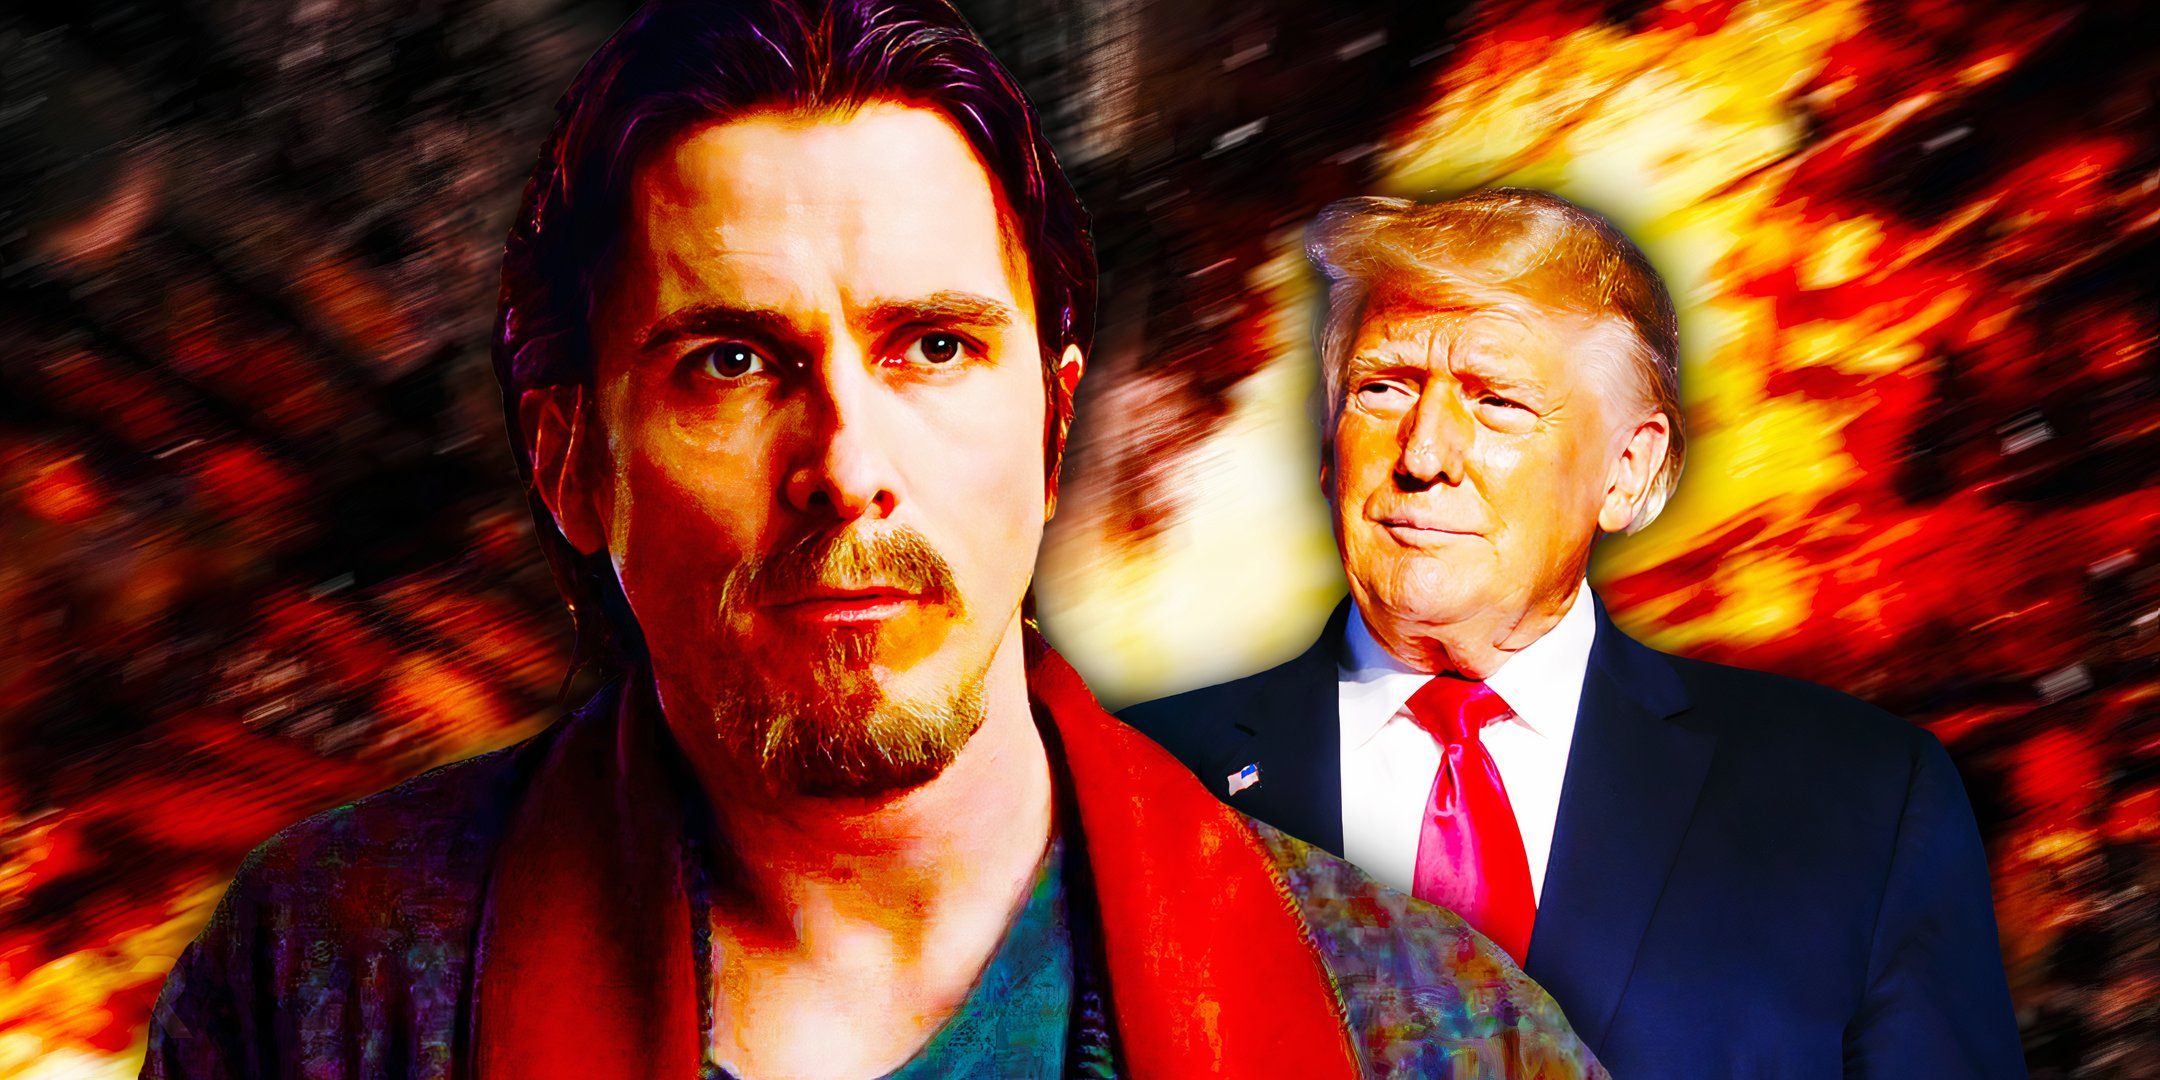 The Dark Knight Rises Christian Bale as recluse Bruce Wayne next to Donald Trump